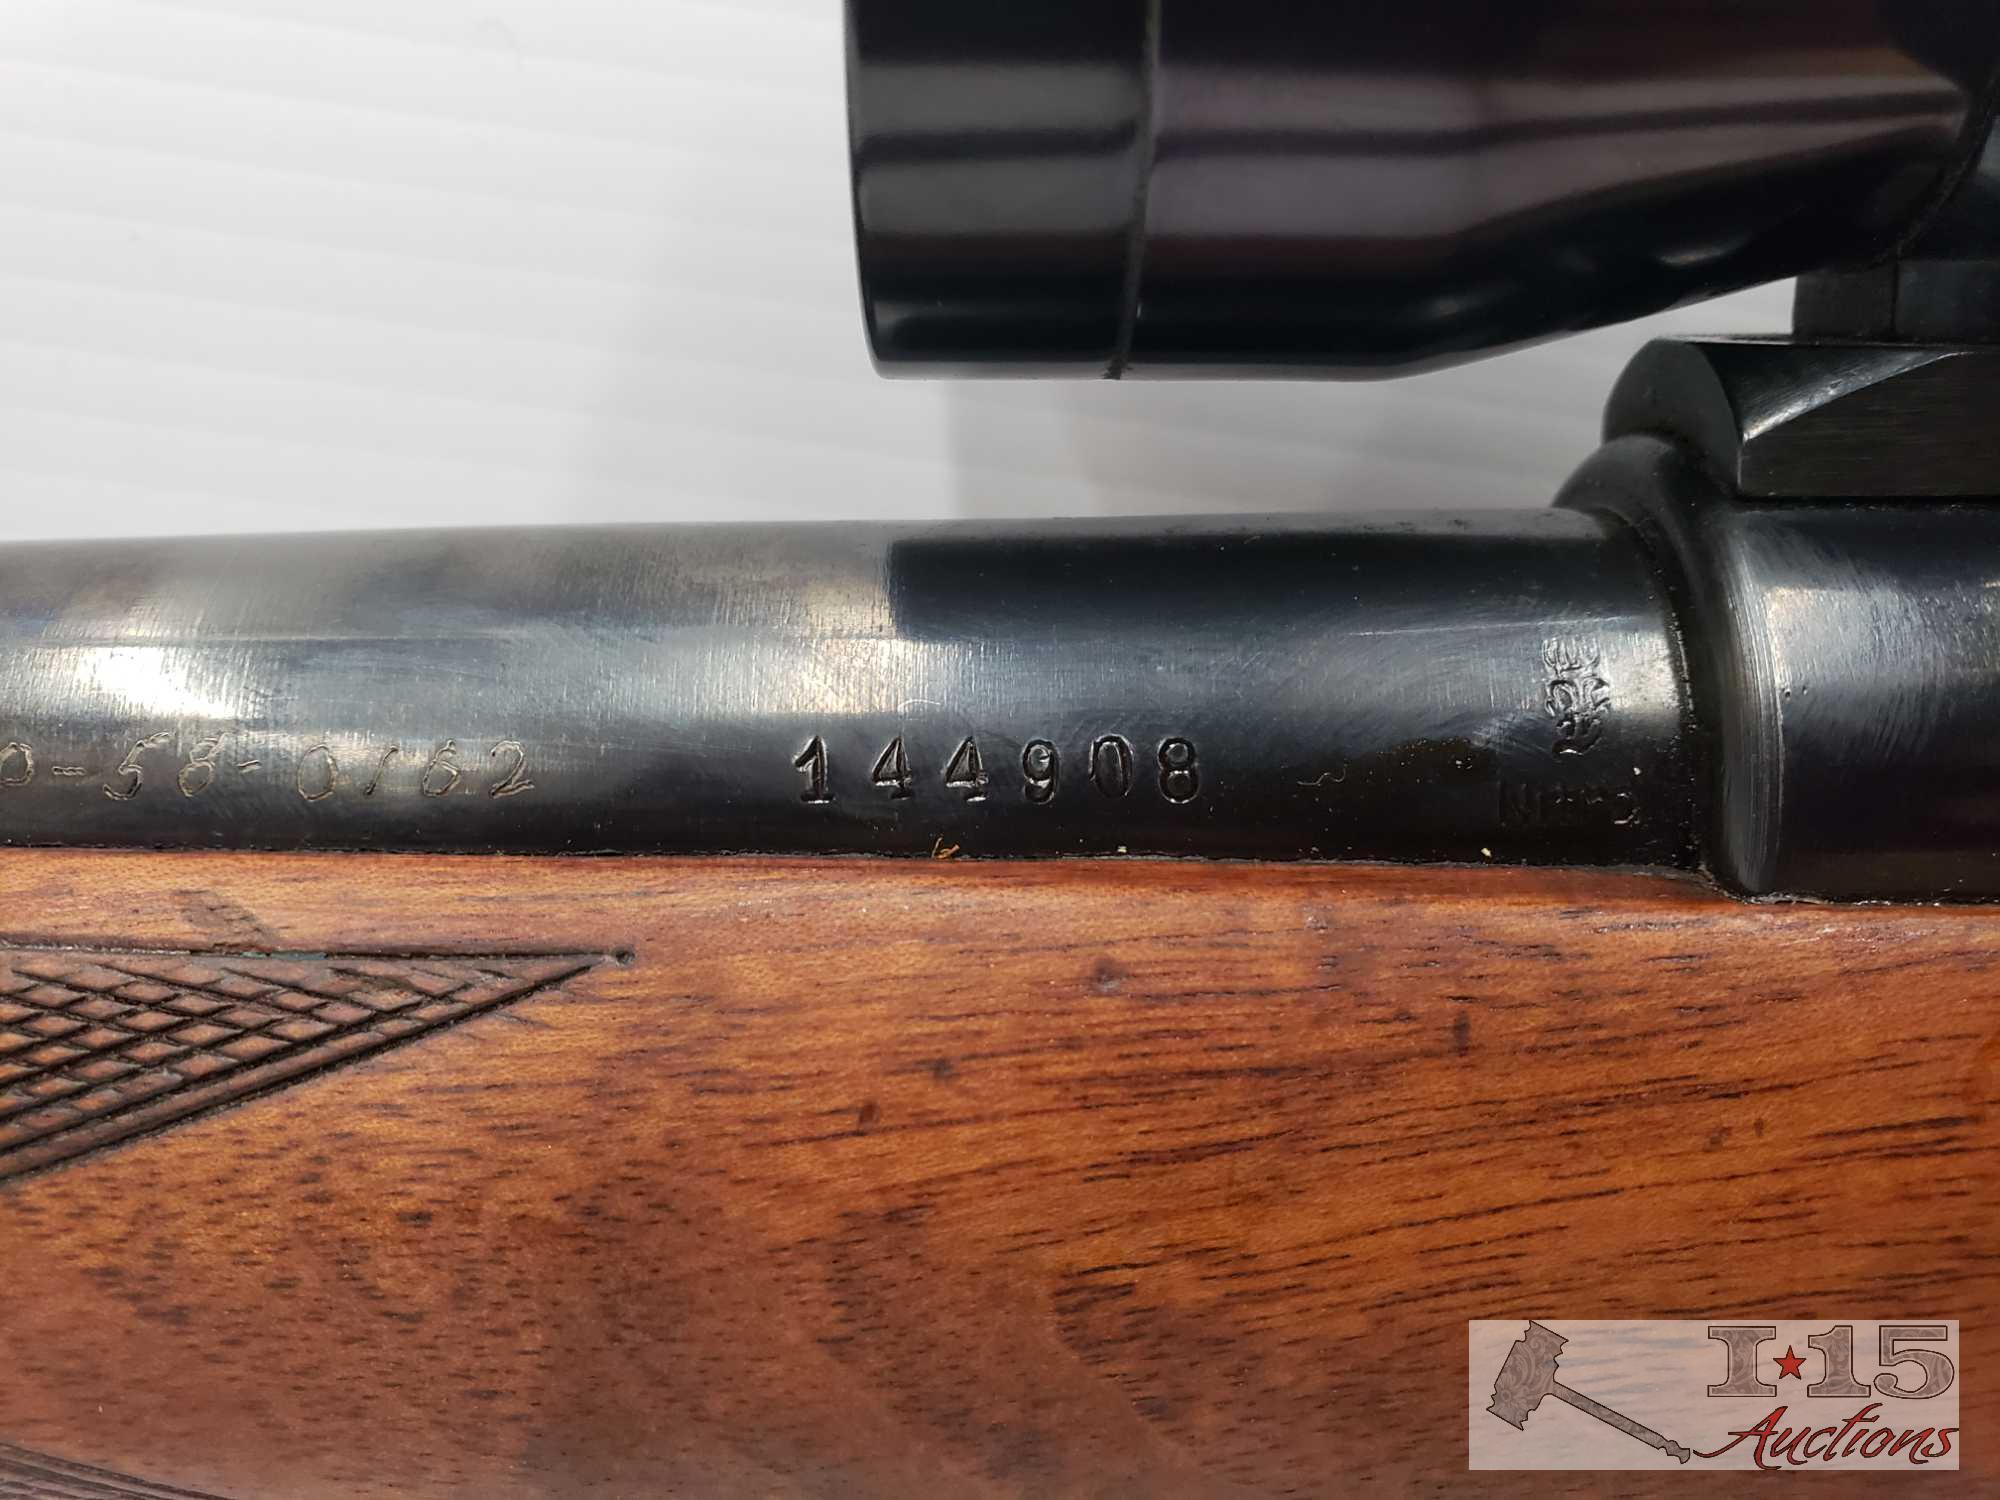 Husqvarna Mauser Action .270 WIN Bolt Action Rifle